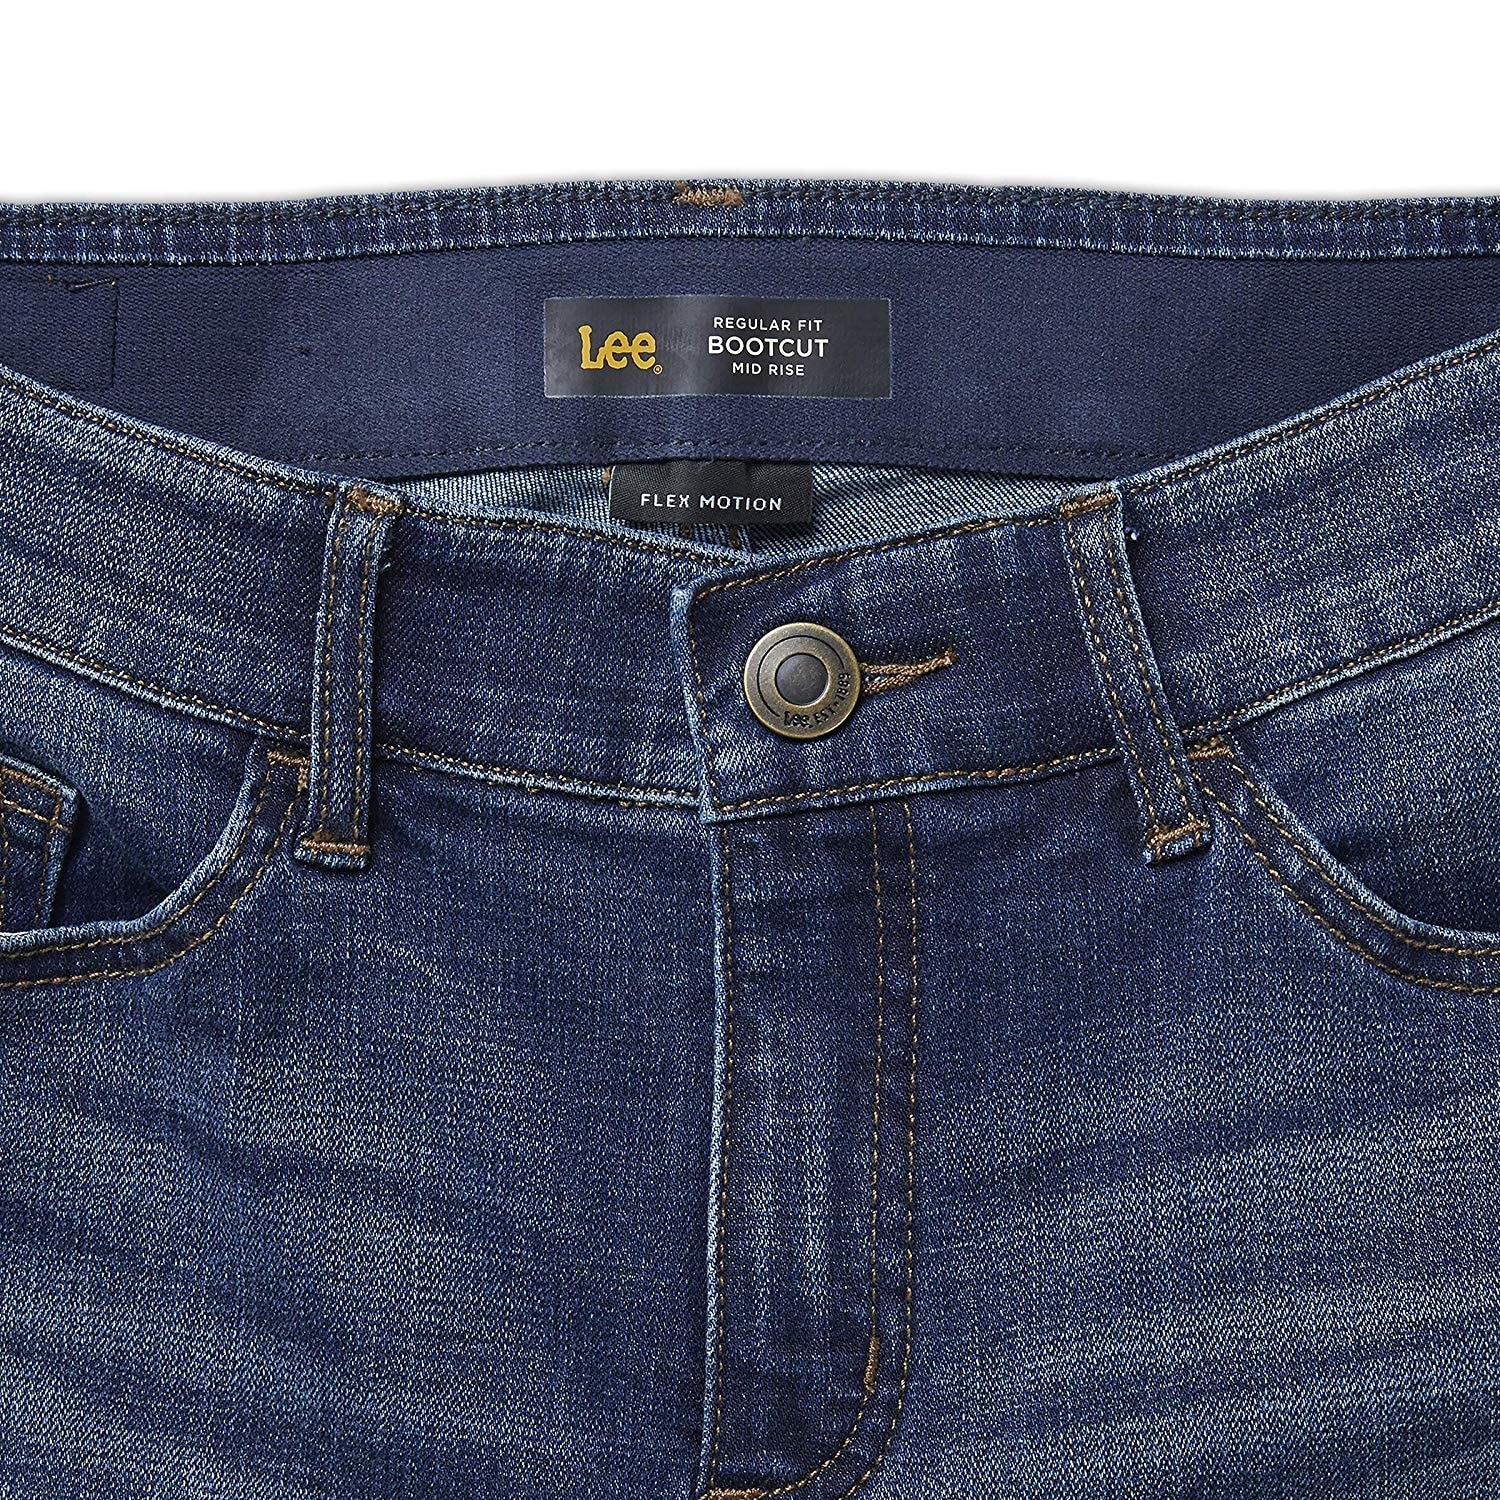 women's lee flex motion regular fit bootcut jeans